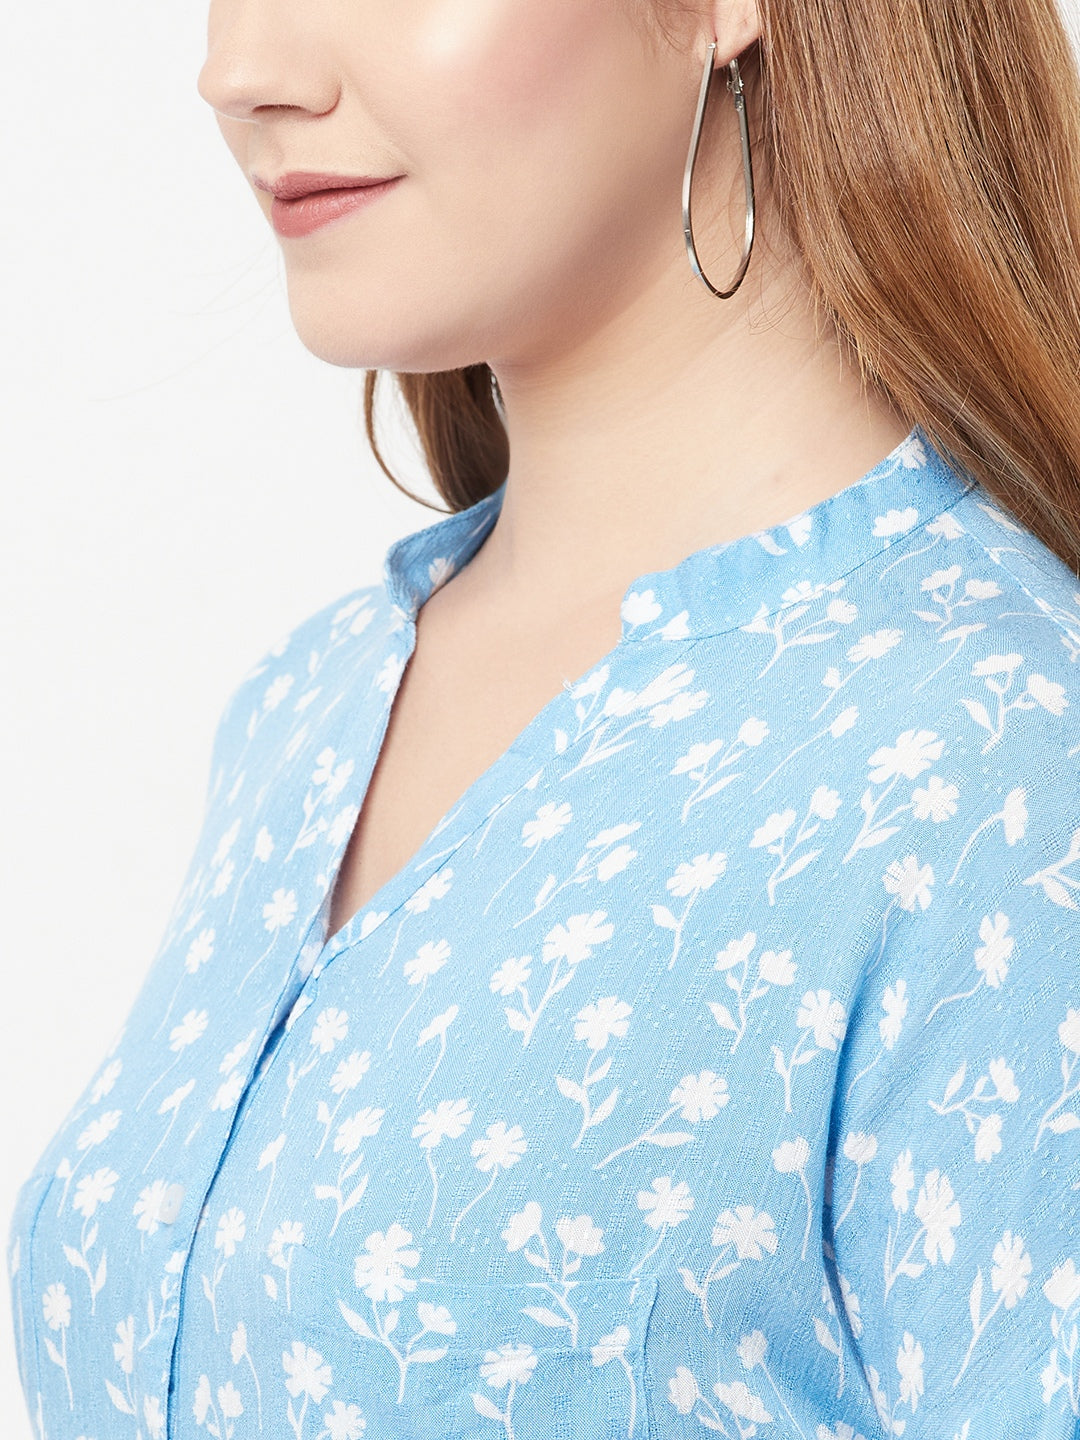 Blue Floral Printed V-Neck Shirt - Women Shirts